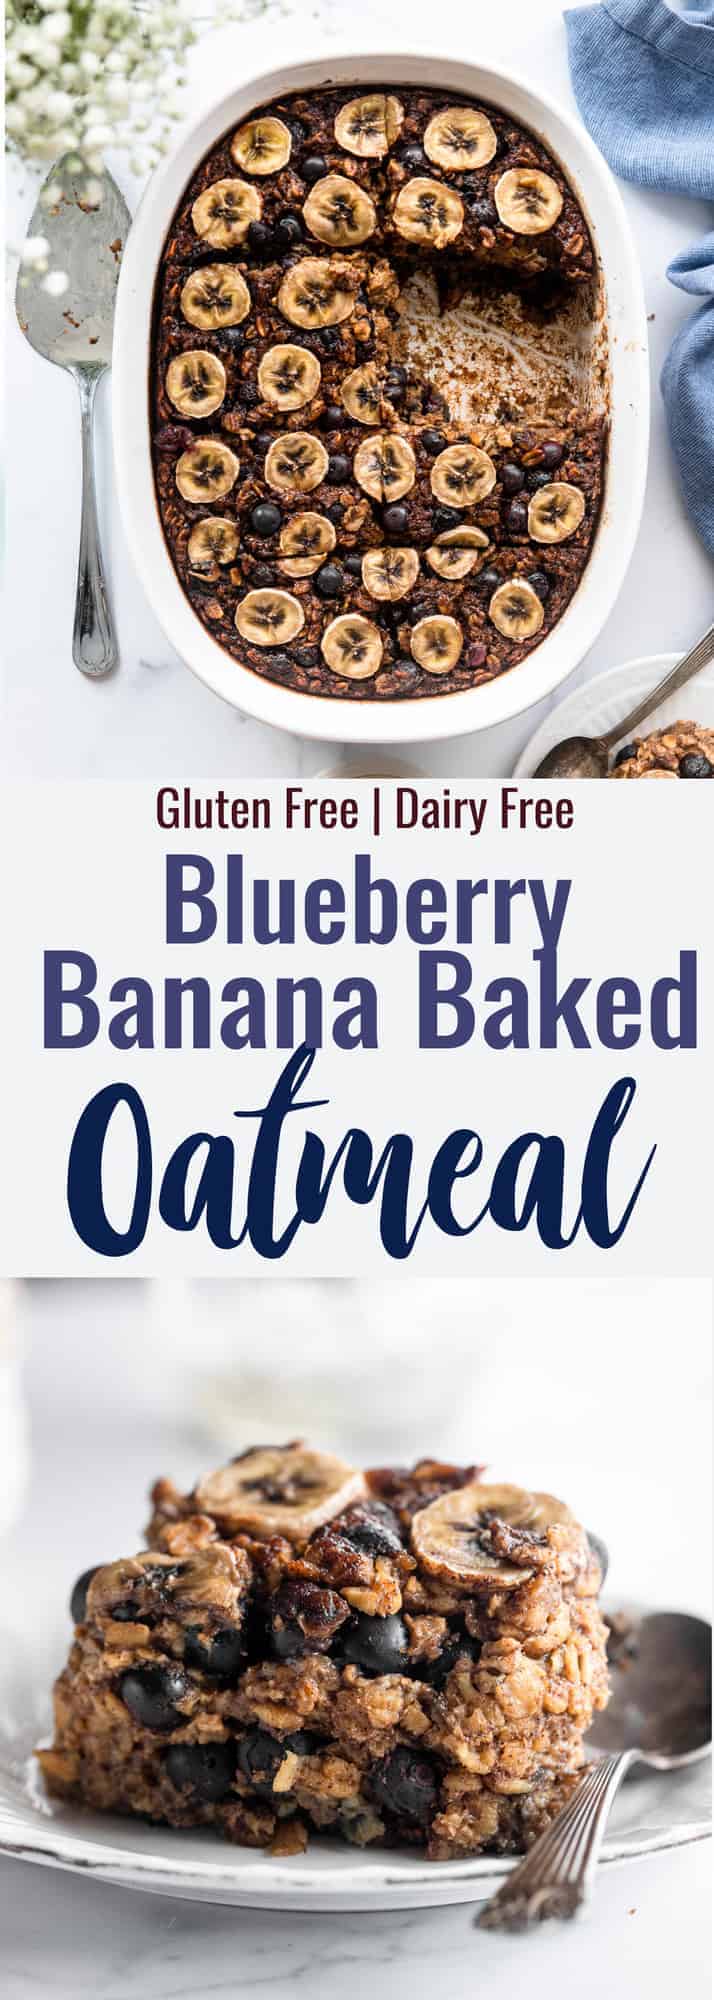 Blueberry Banana Baked Oatmeal collage photo